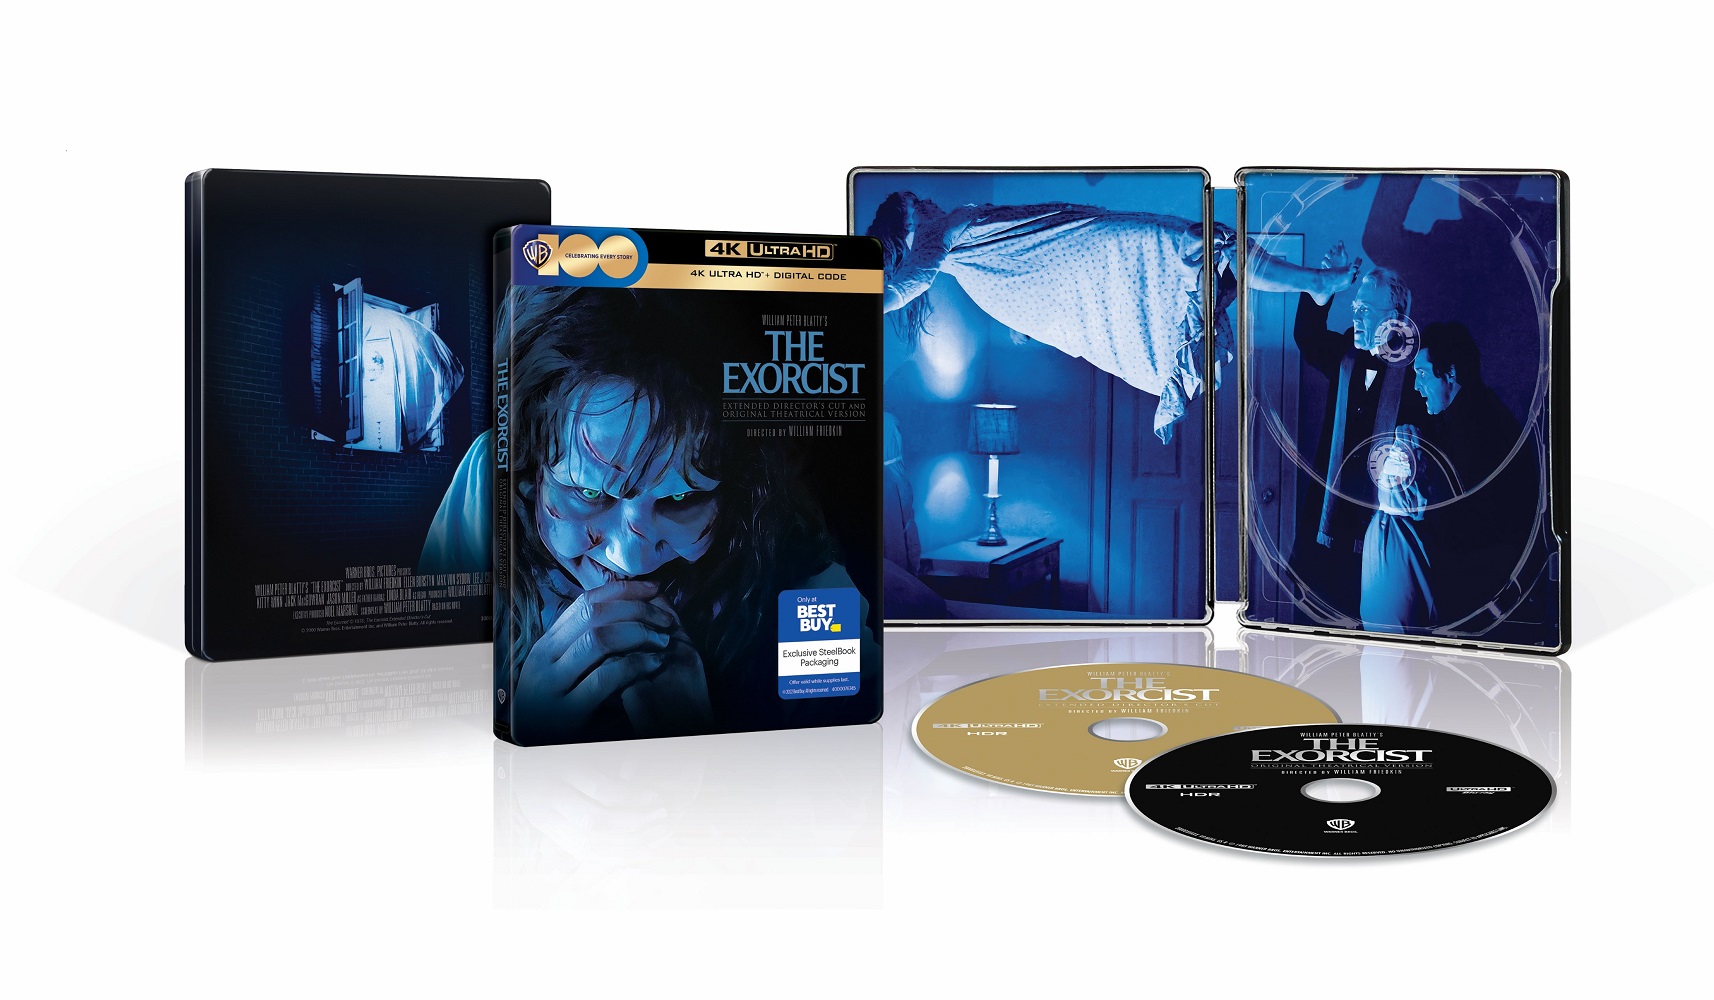 The Creator, UK DVD, Blu-ray, 4K Ultra HD Blu-ray and Steelbook release  details